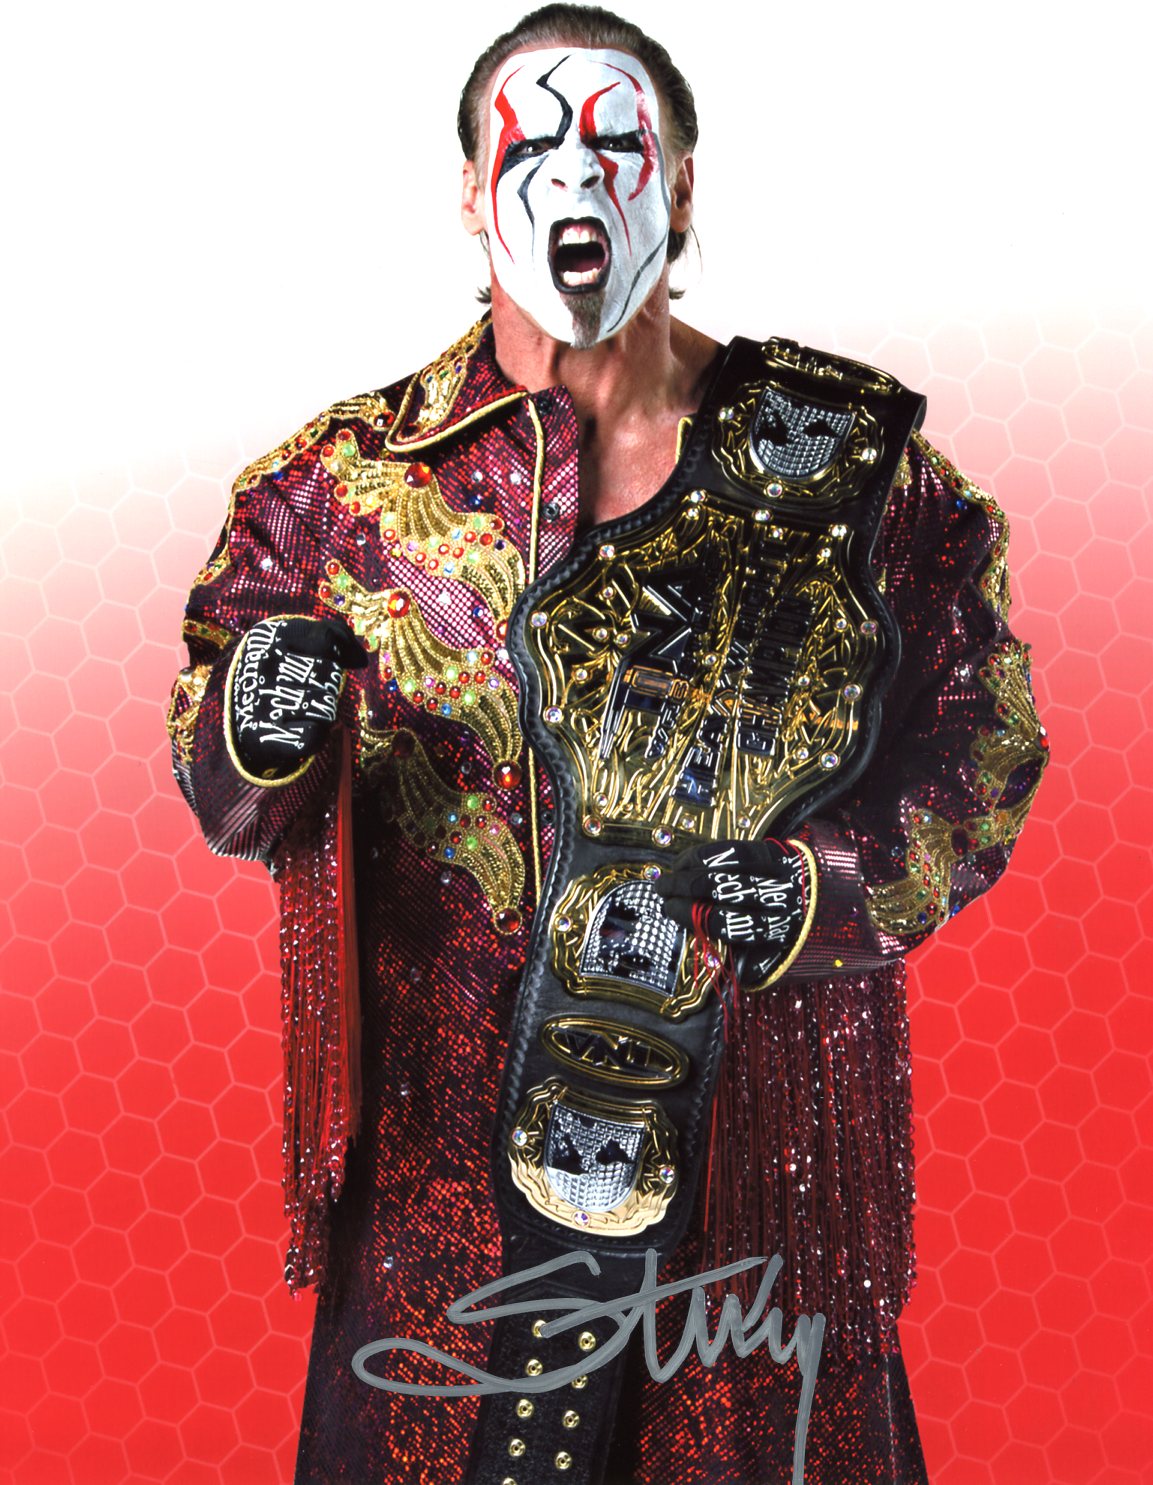 Sting AEW / WWE Wrestling 8x10 Signed Photo JSA Certified Autograph